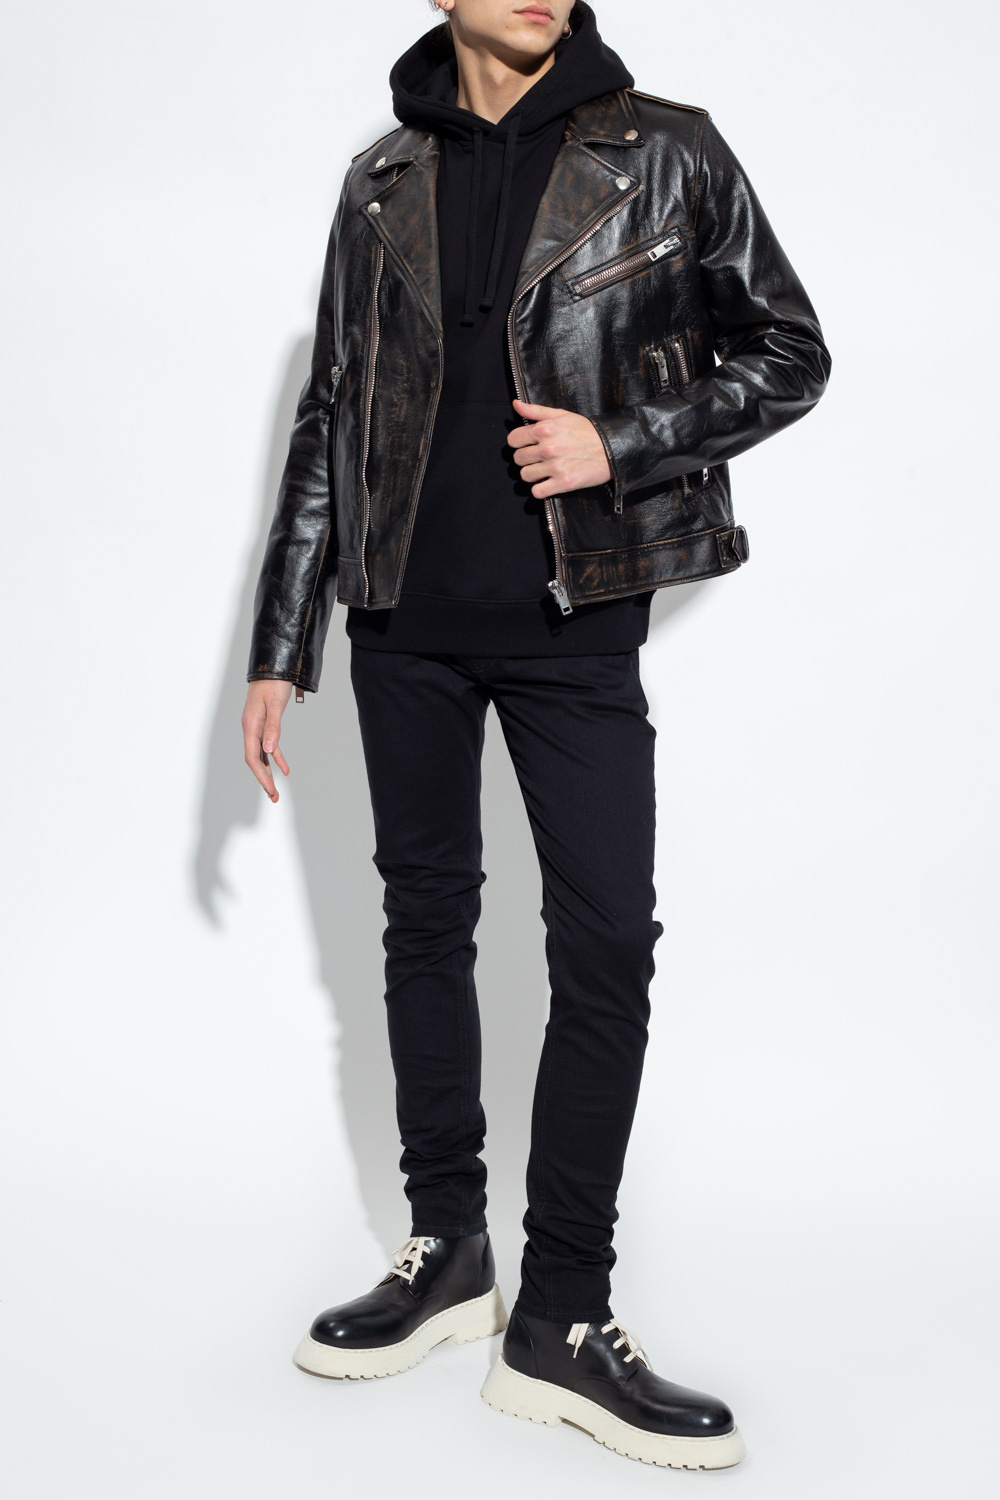 IetpShops | Hood - Diesel 'S - Men's Clothing | Doval' relaxed-fit hoodie -  Rob - levis menlo cossack jacket black